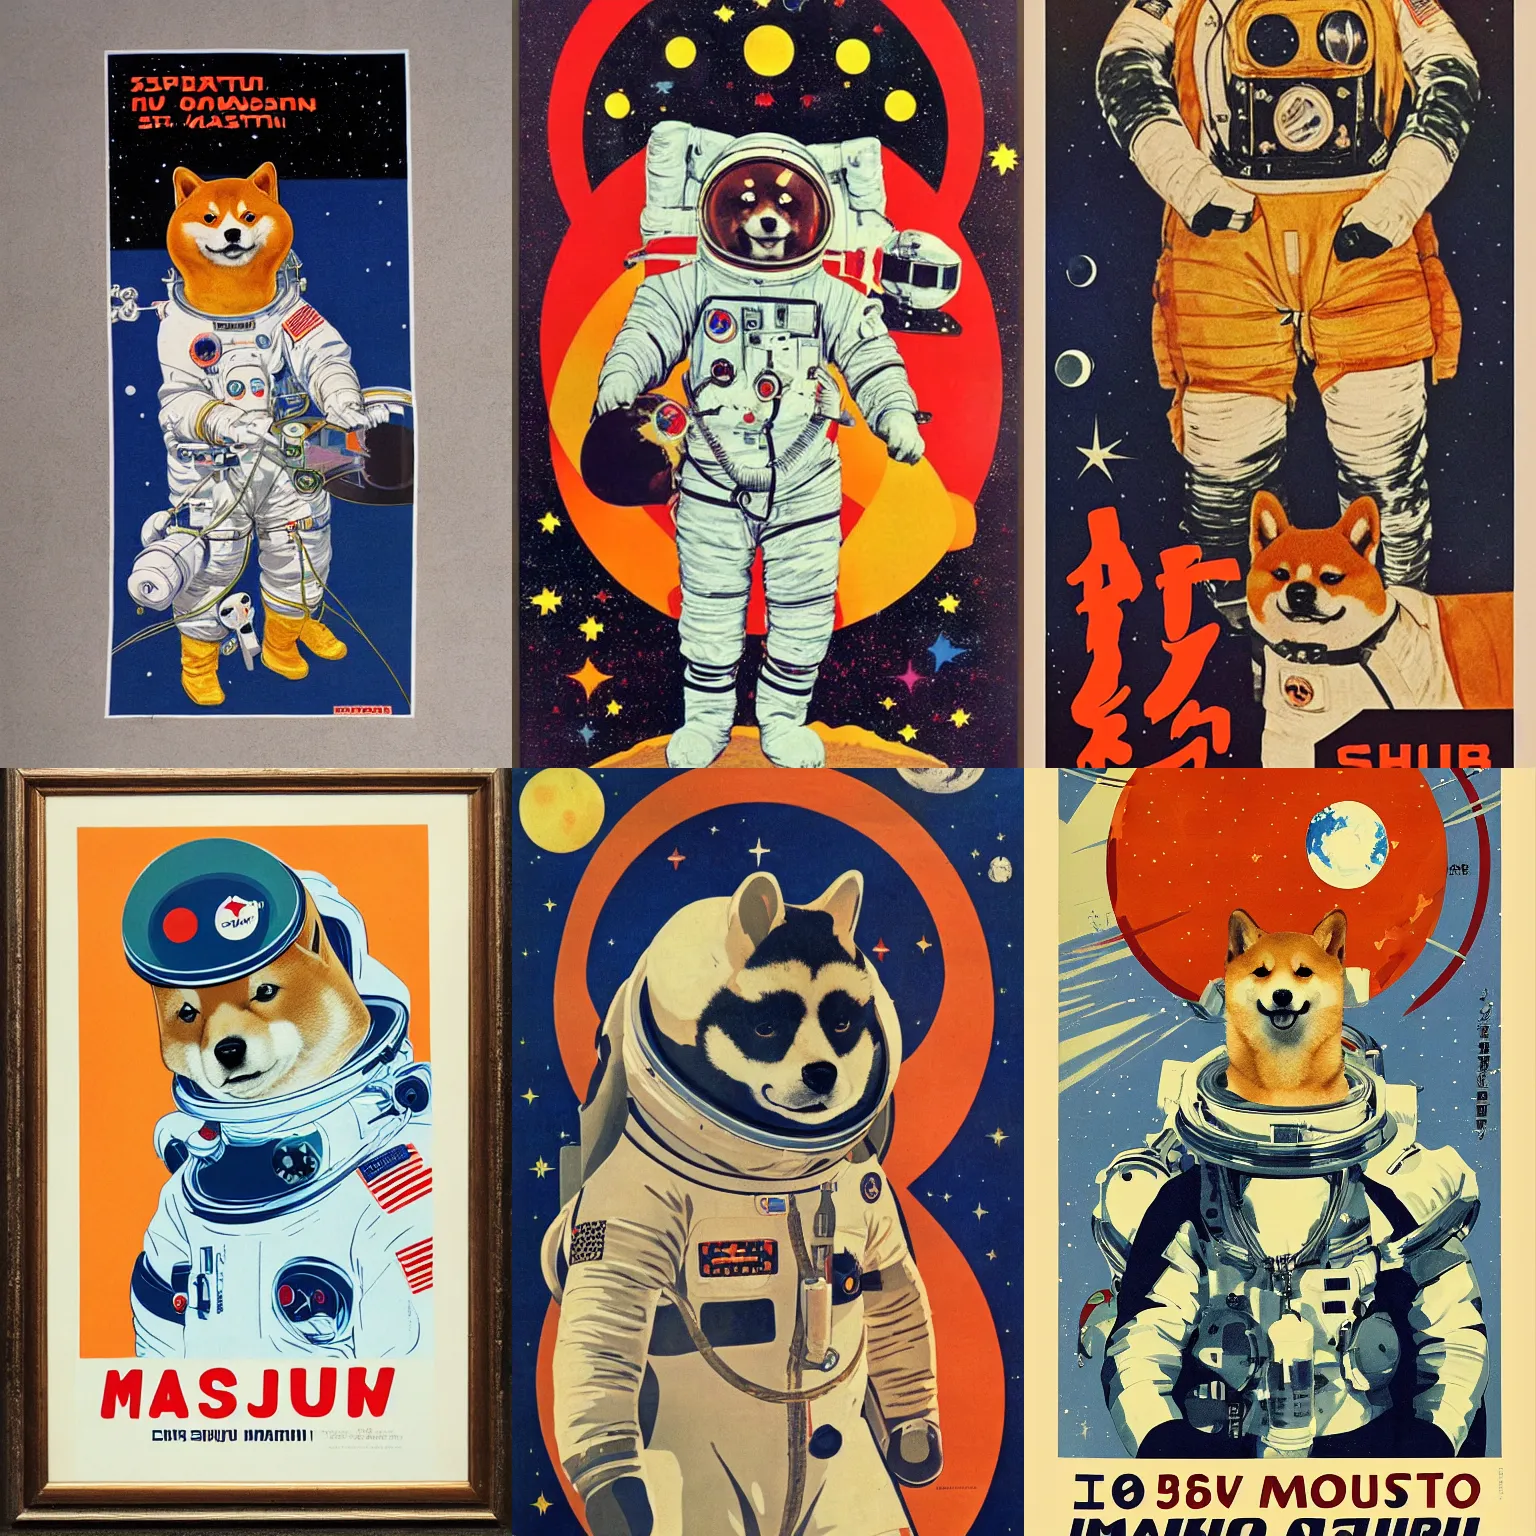 Prompt: Shiba Inu cosmonaut portrait, mars mission, 60s poster, 1966 Soviet Japanese